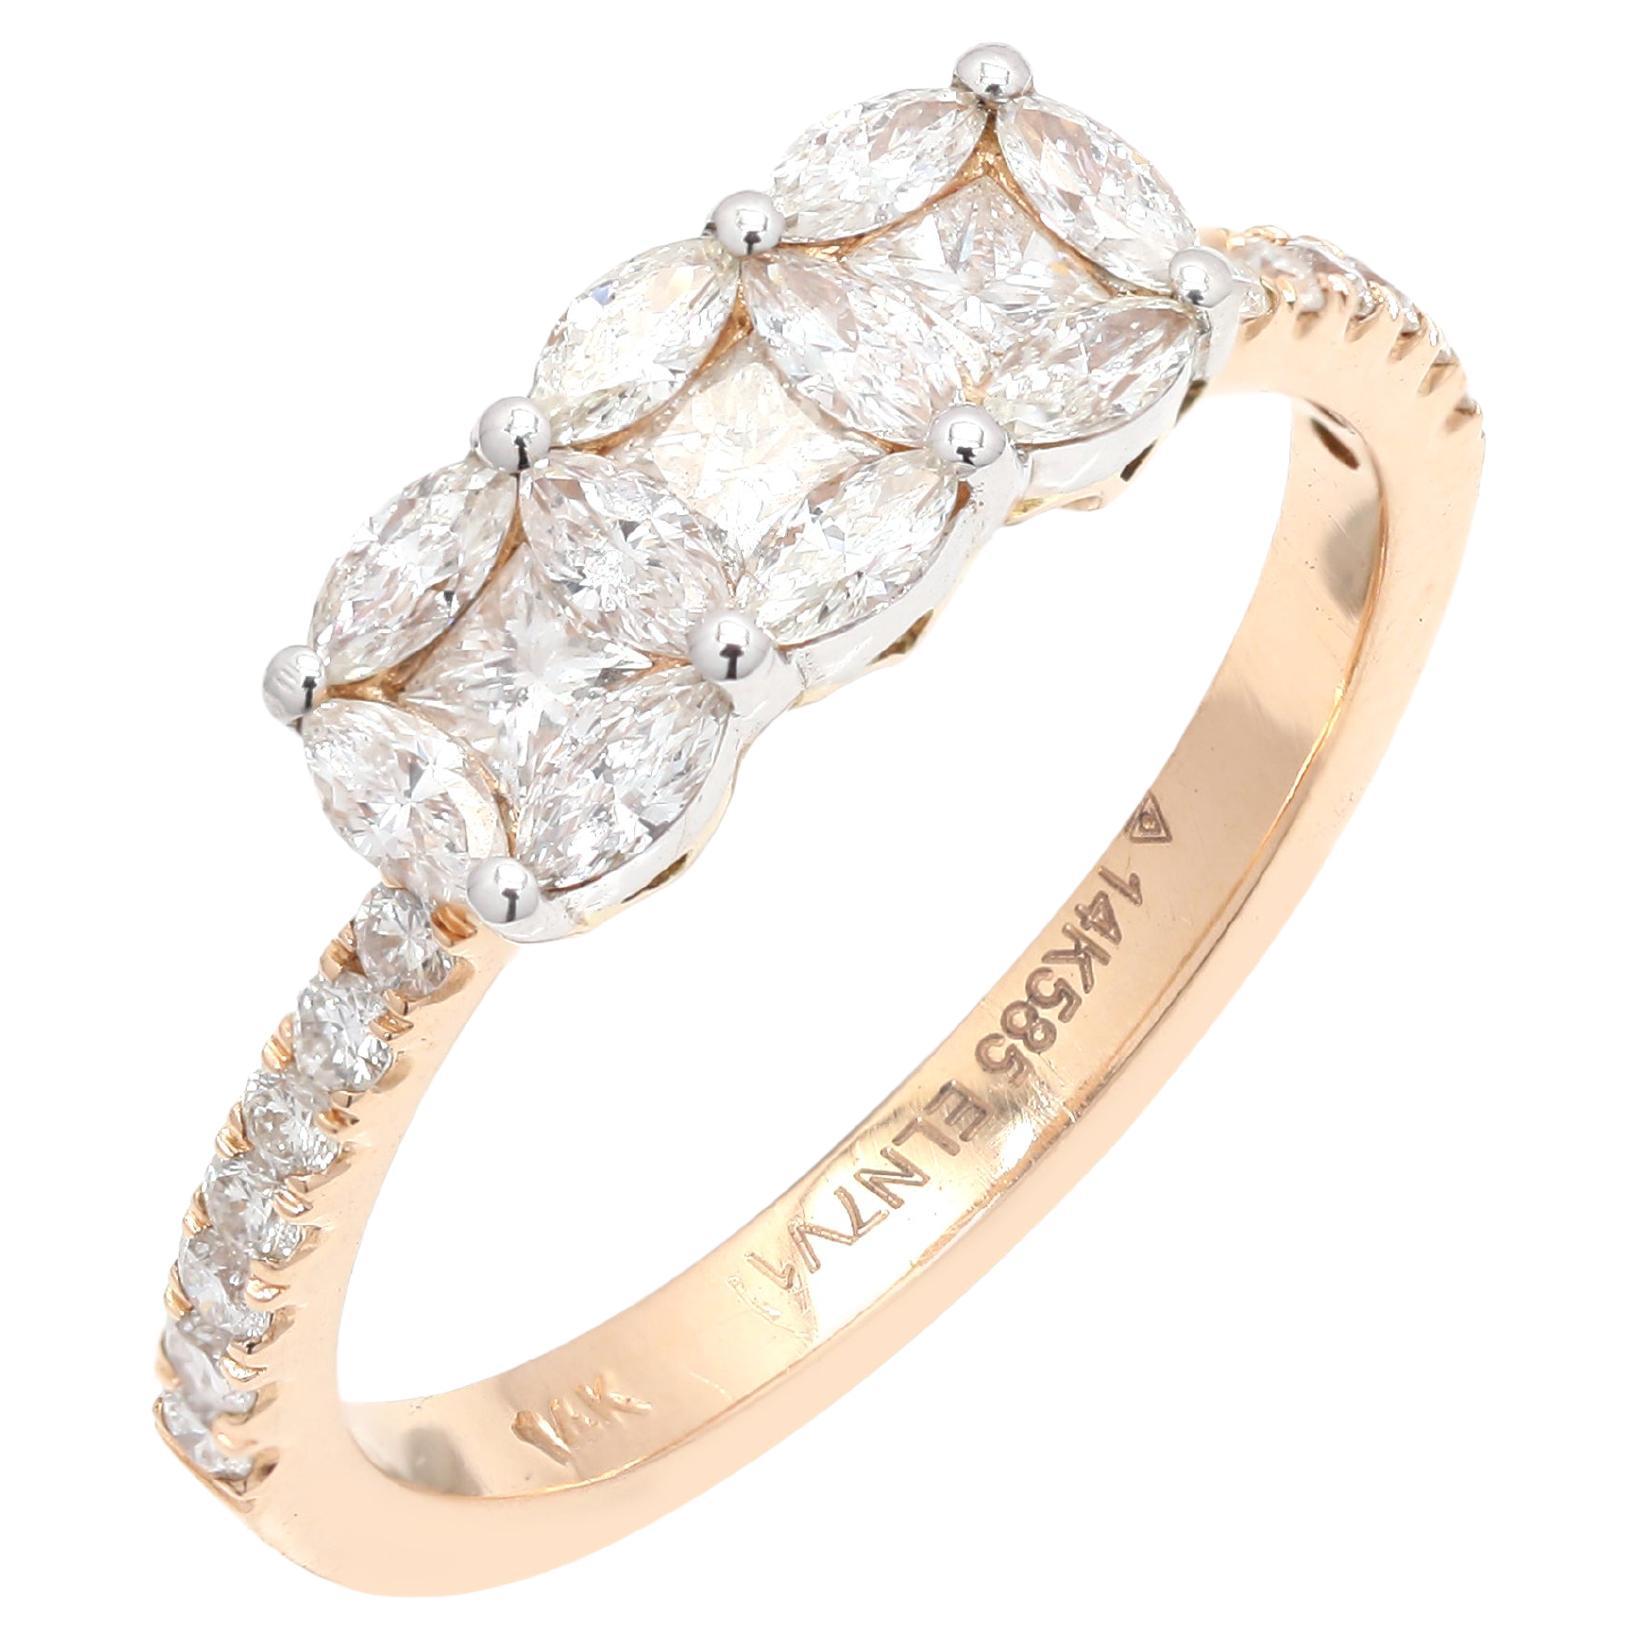 14k Yellow Gold Bespoke 0.78 Carat Brilliant Diamond Engagement Ring